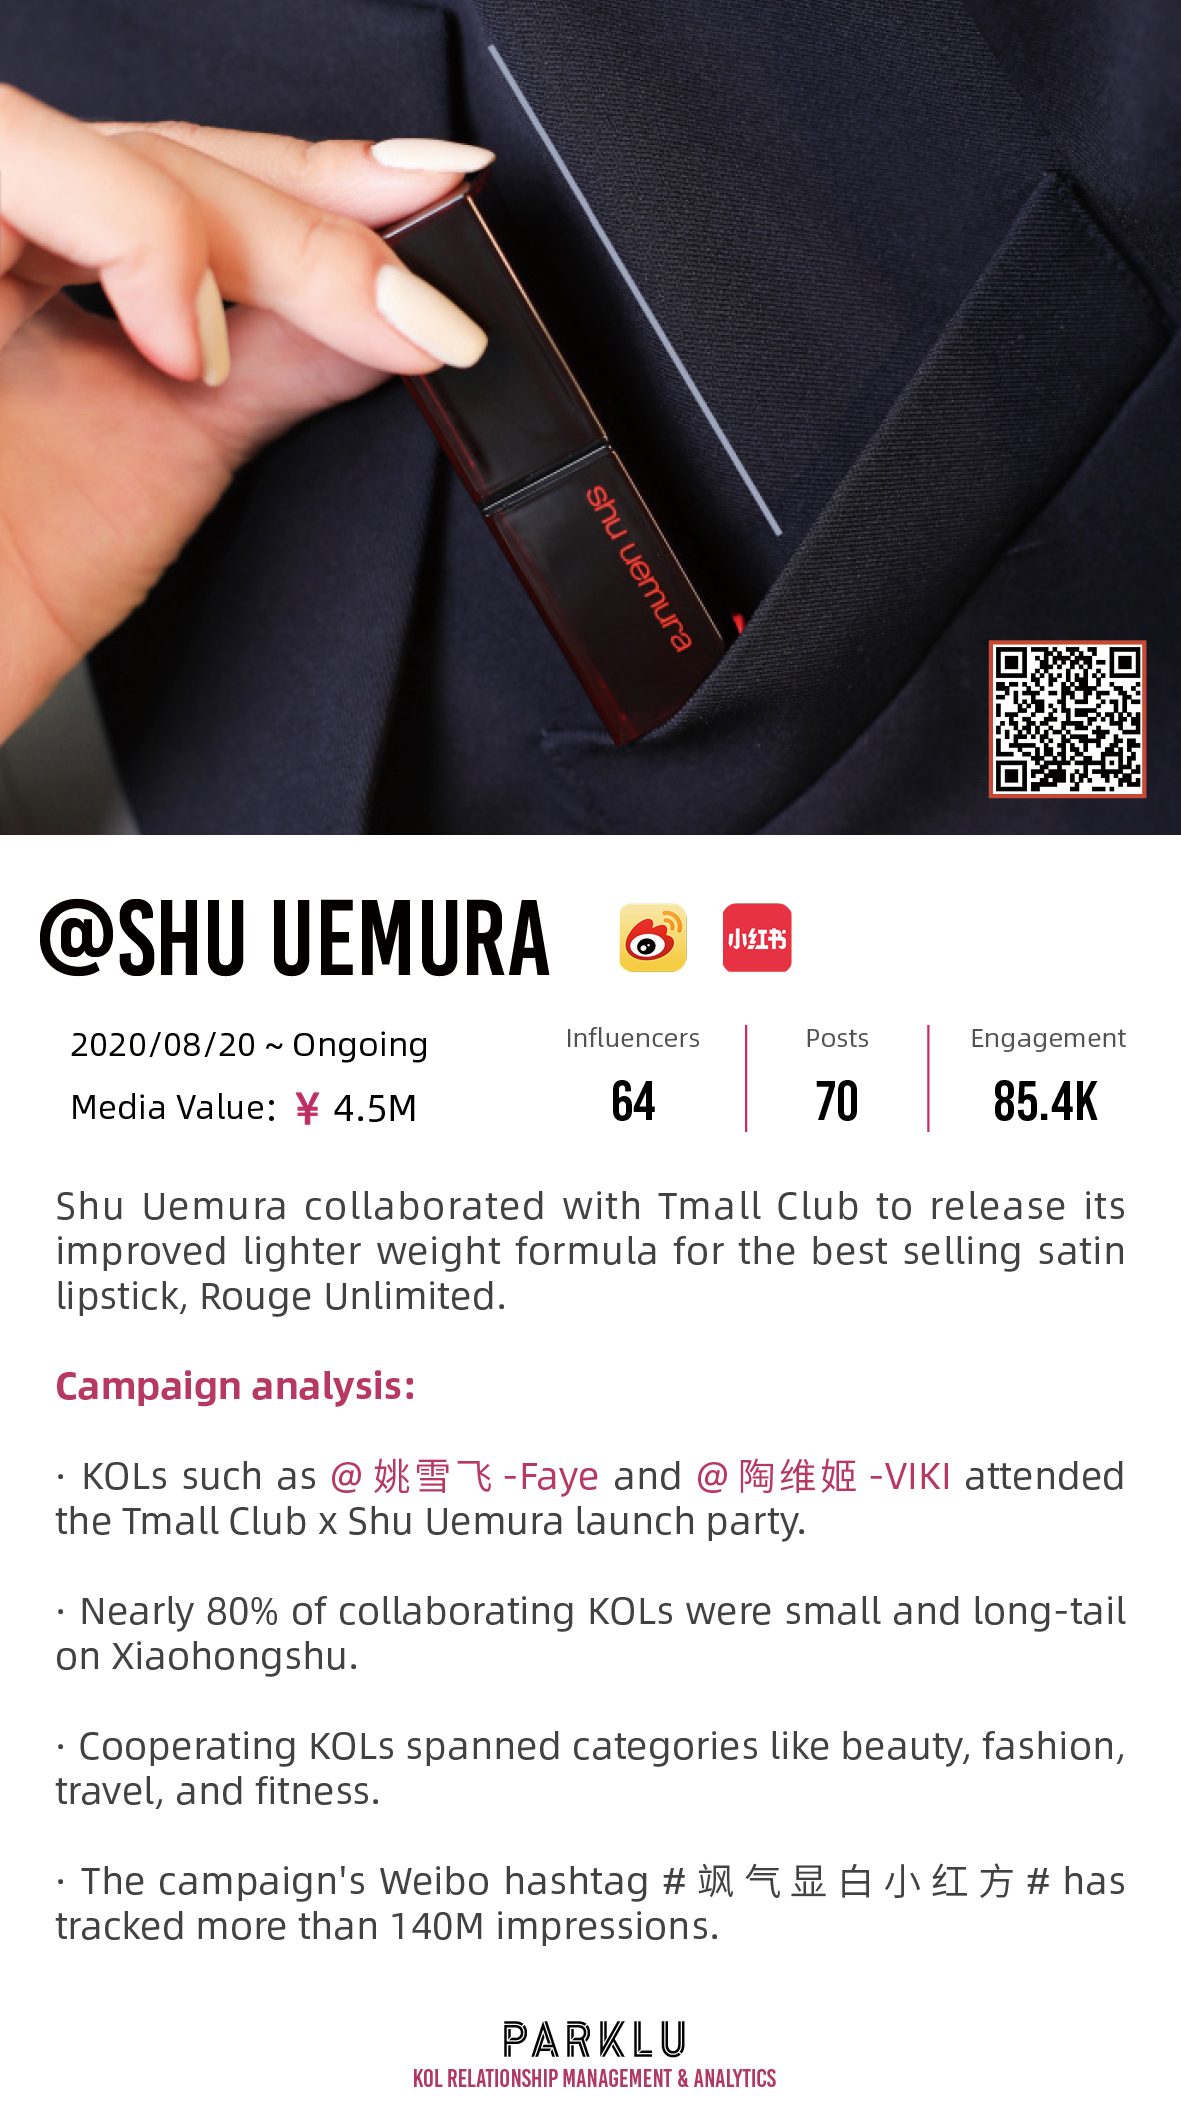 Shu Uemura’s Rouge Unlimited